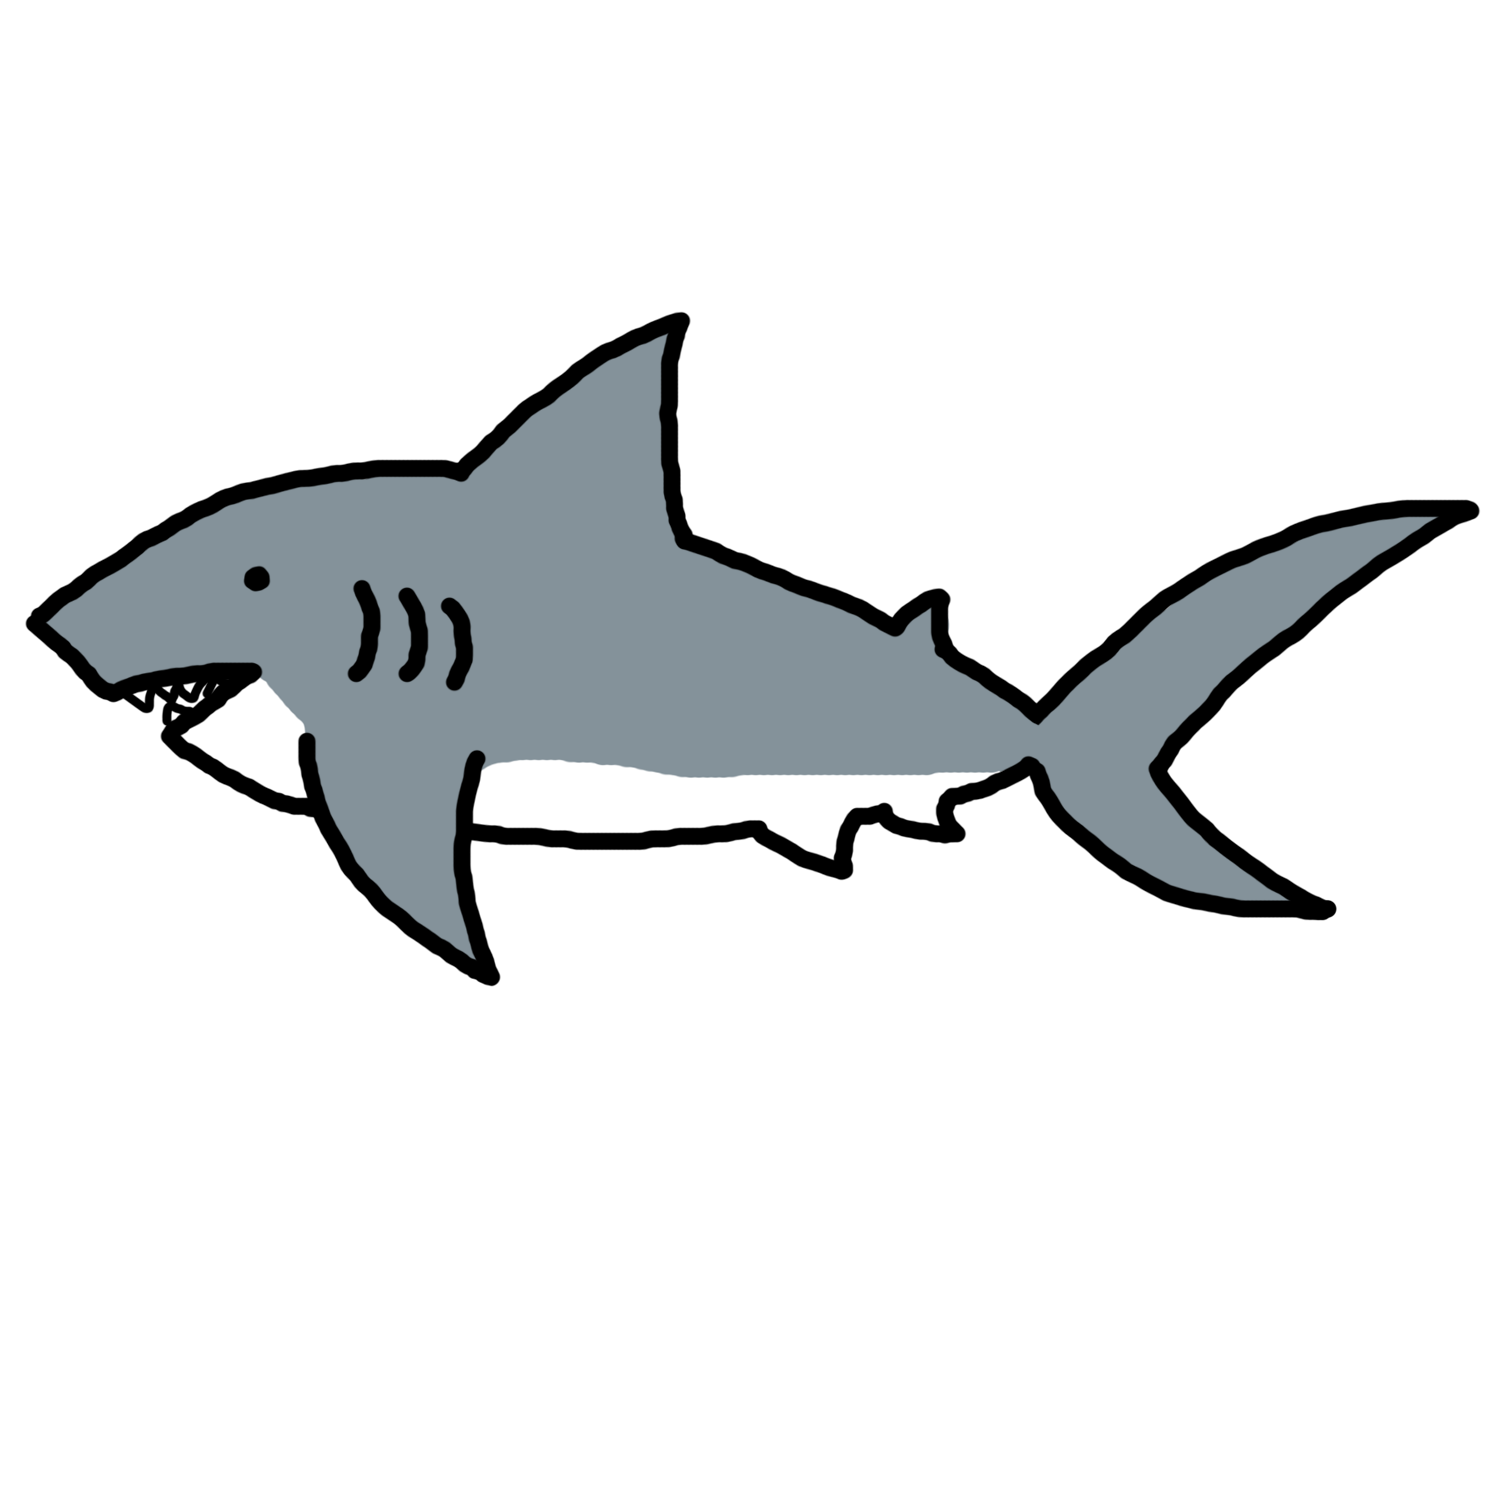 Basking Shark Clipart - ClipArt Best